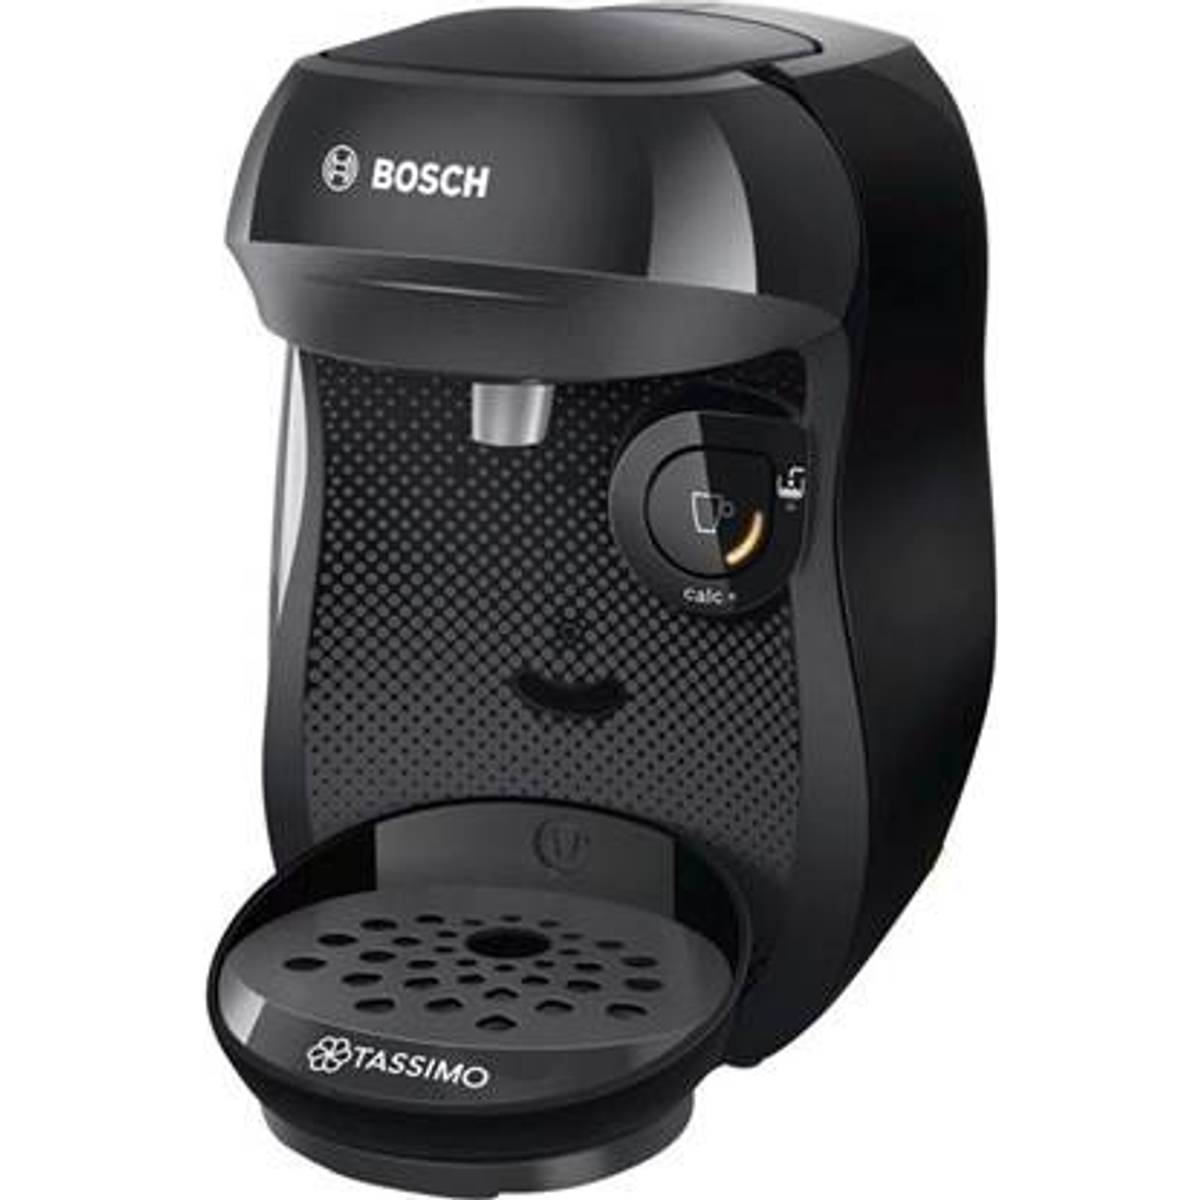 Bosch Coffee Maker Price Bosch Coffee Machine [ 1200 x 1200 Pixel ]